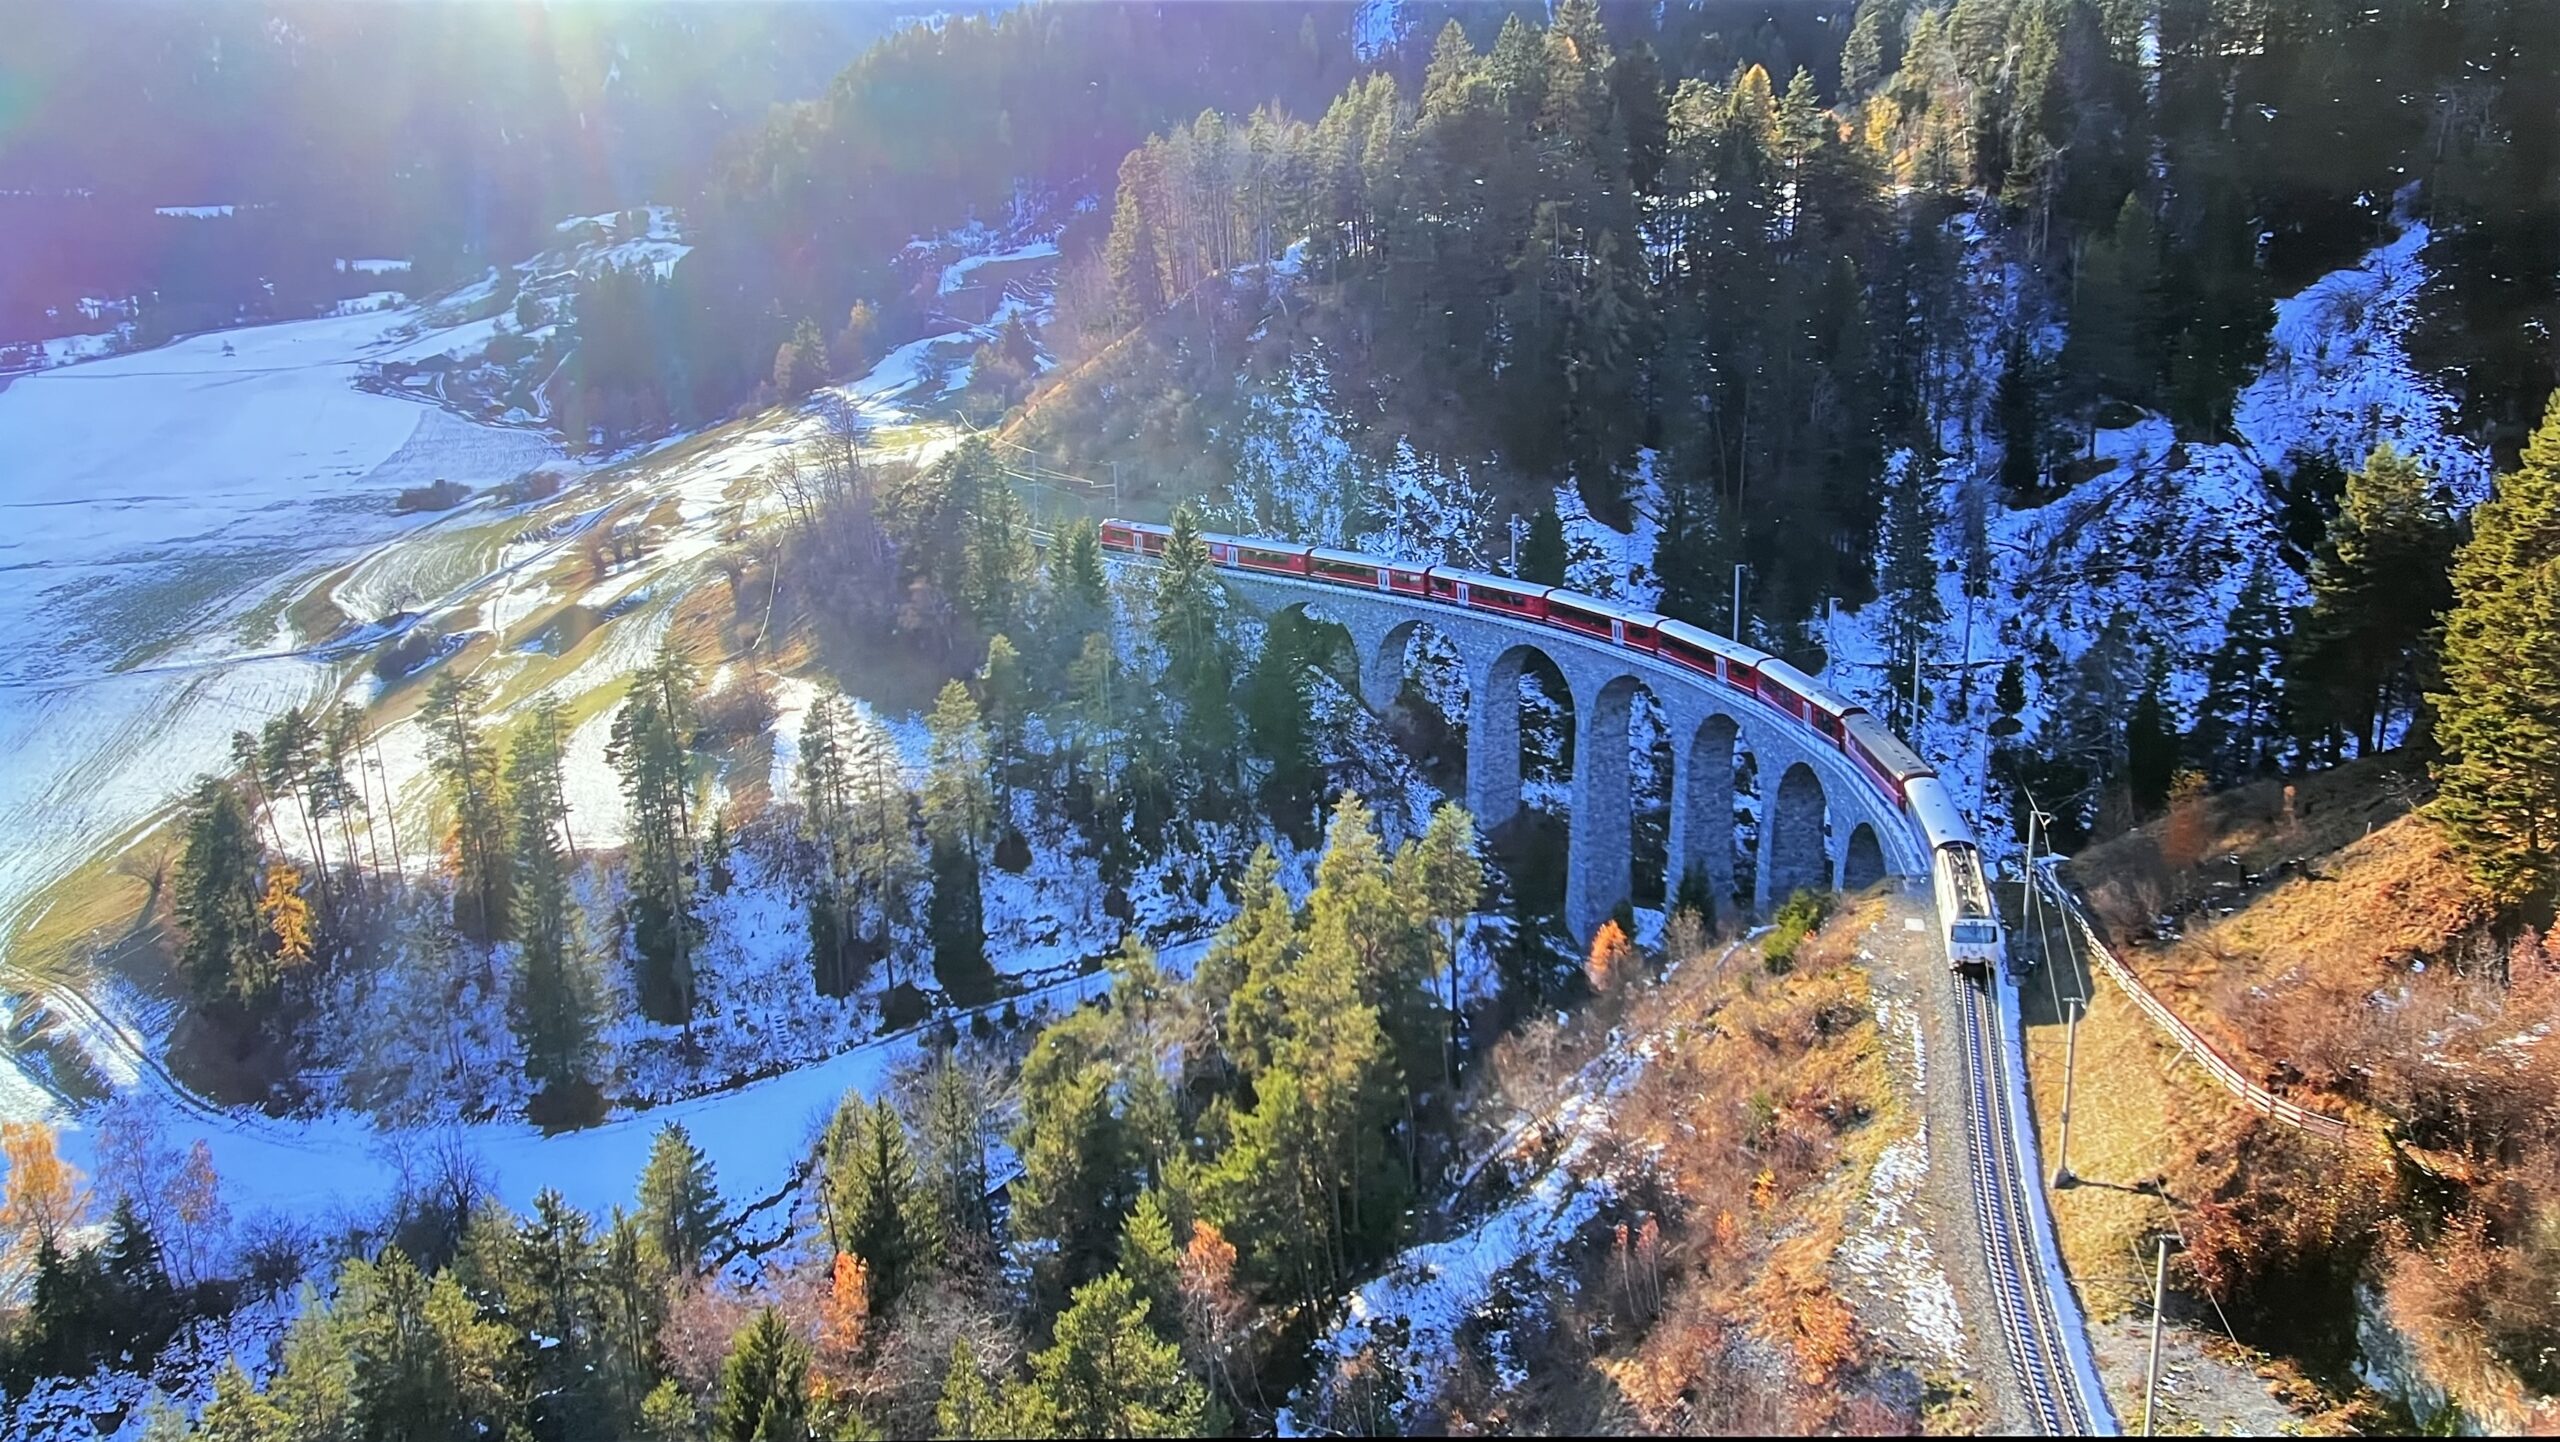 Kadr z filmu YouTube "FLYING OVER SWITZERLAND" po kalibracji 